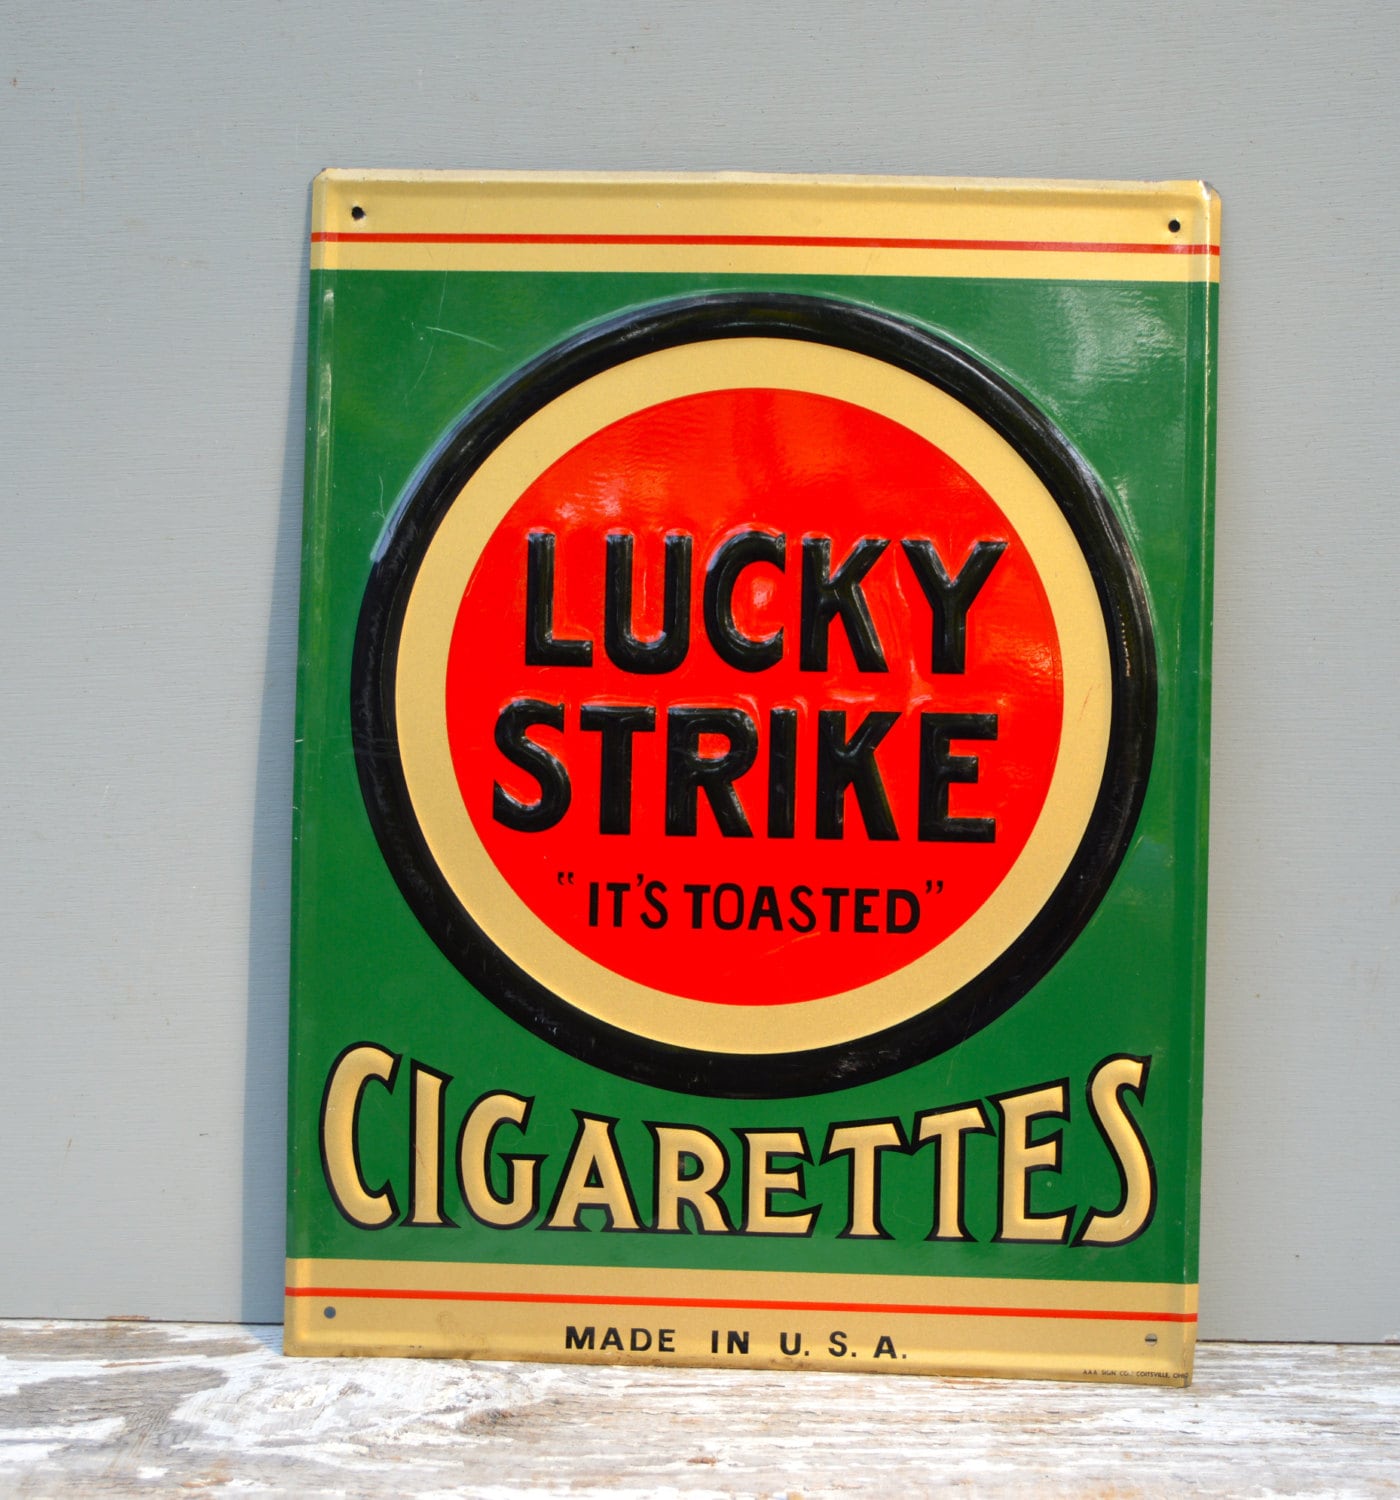 Лаки страйк грин. Сигареты лаки страйк компакт. Сигареты Lucky Strike Green. Американские сигареты лайки страйк.